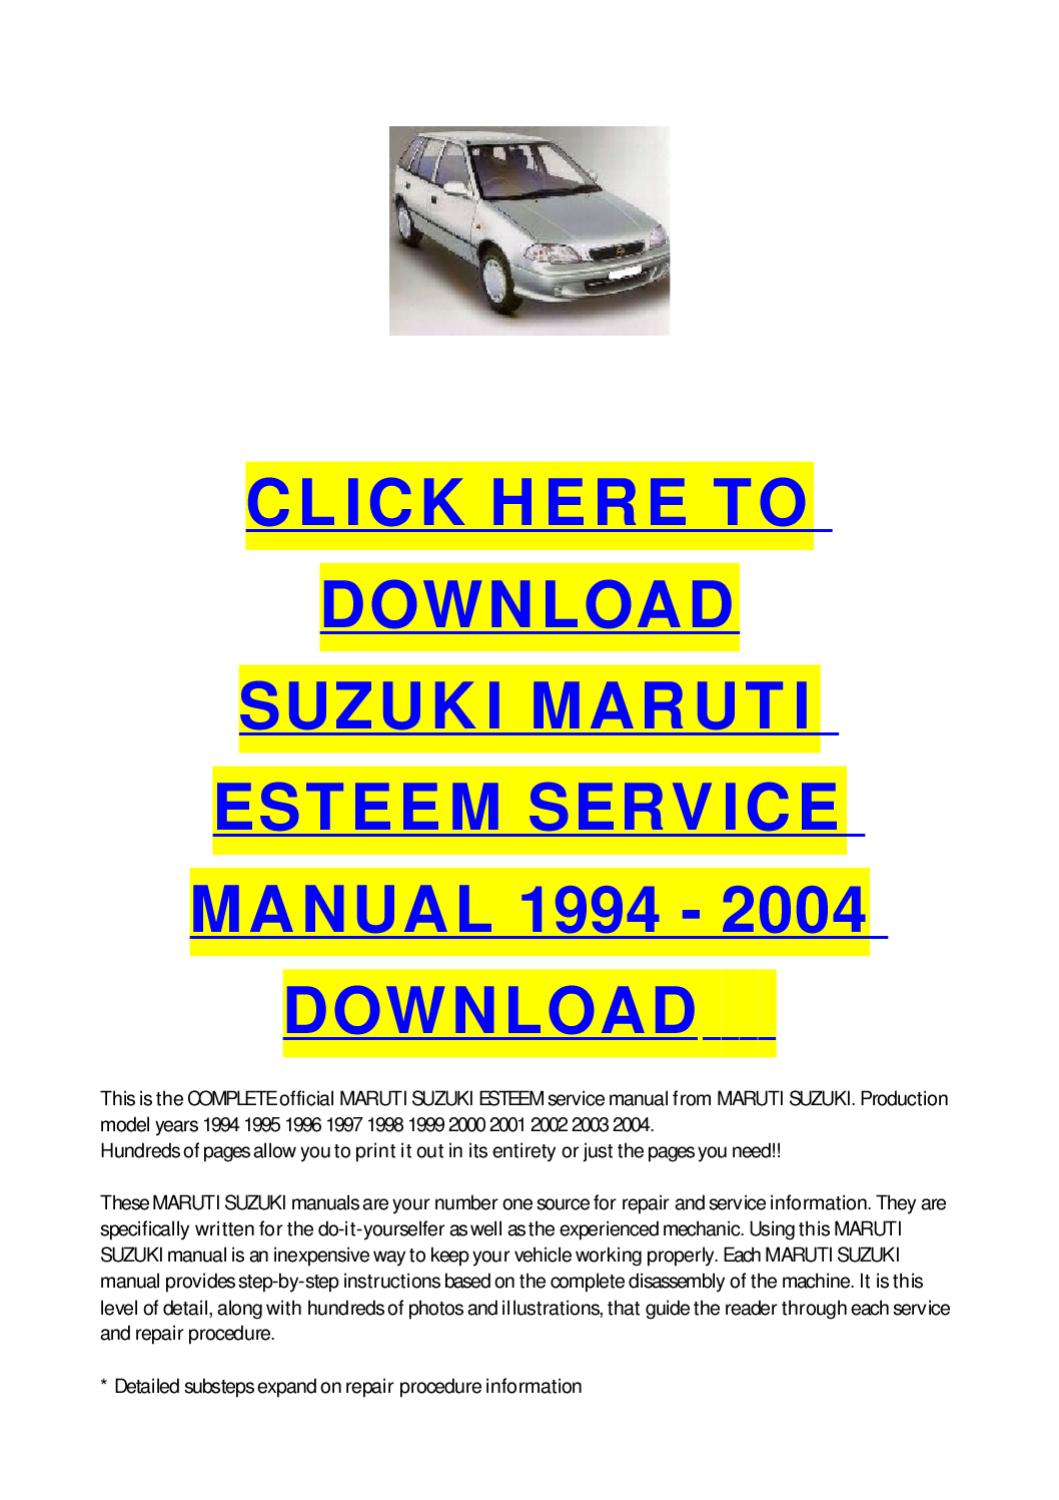 1998 Suzuki Esteem Repair Manual Download - nmyellow